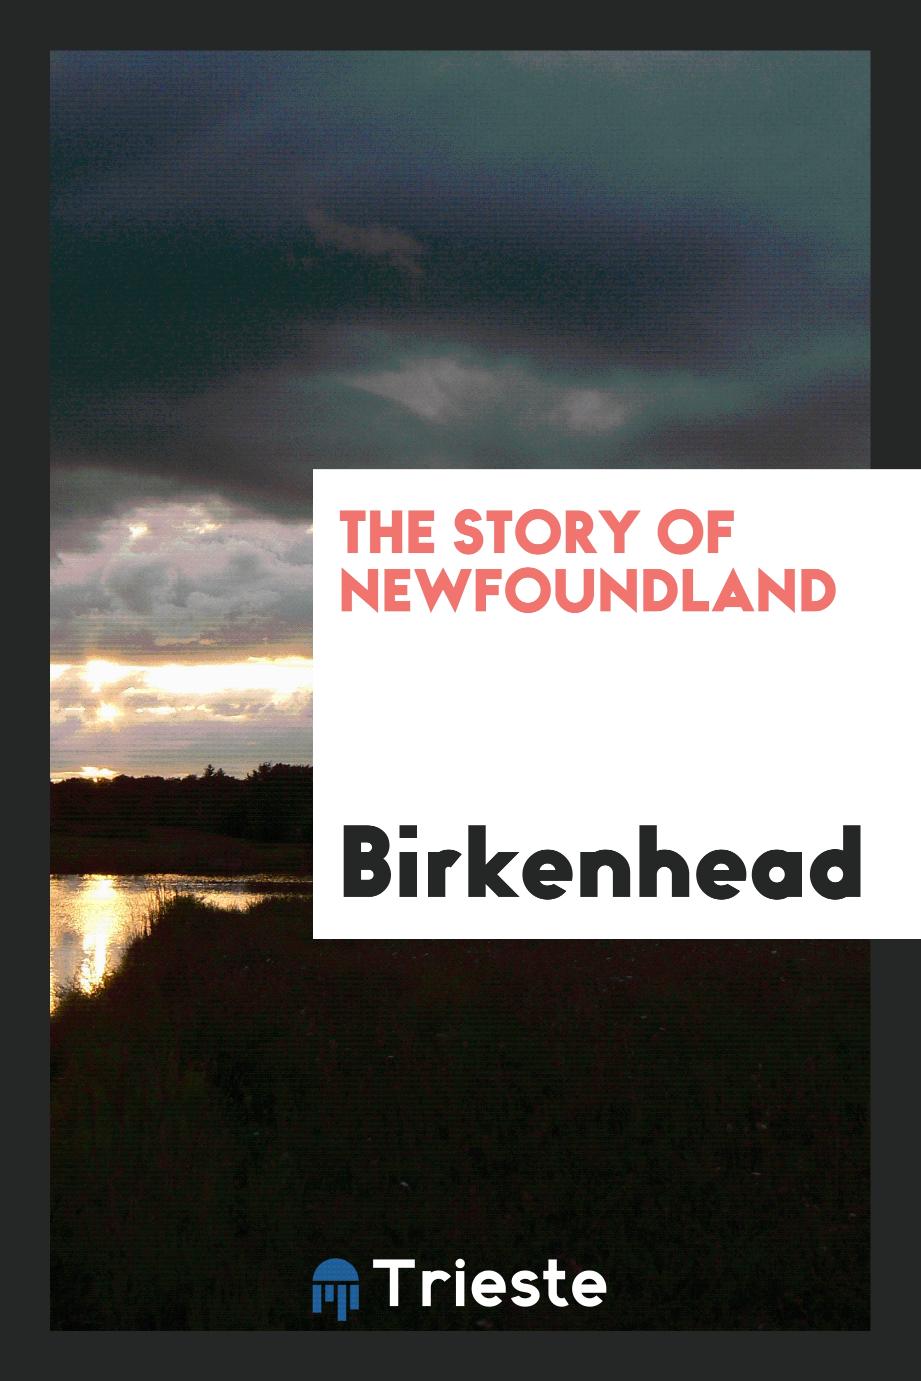 Birkenhead - The story of Newfoundland